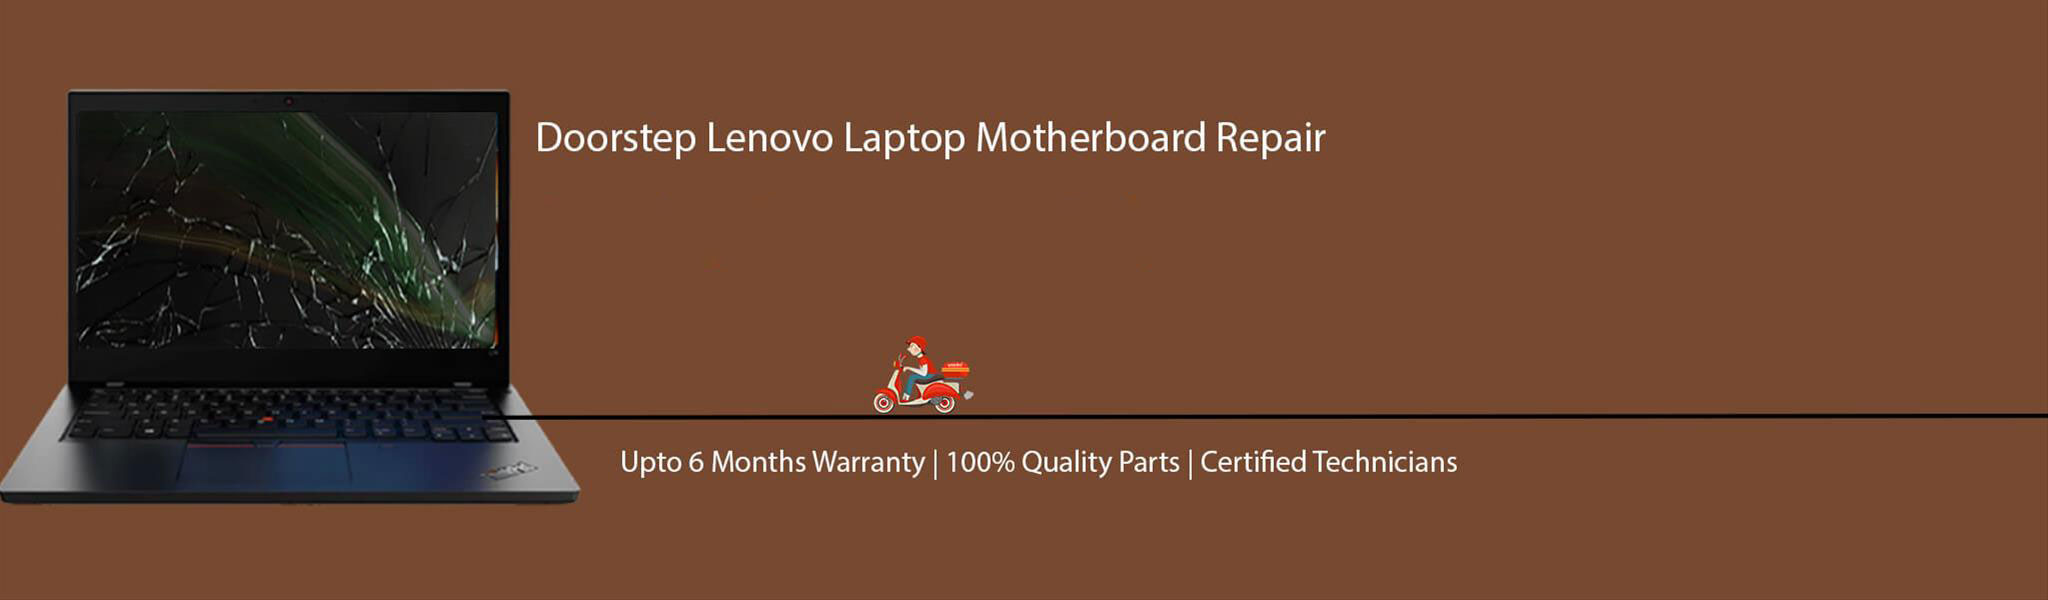 lenovo-laptop-motherboard-repair.jpg